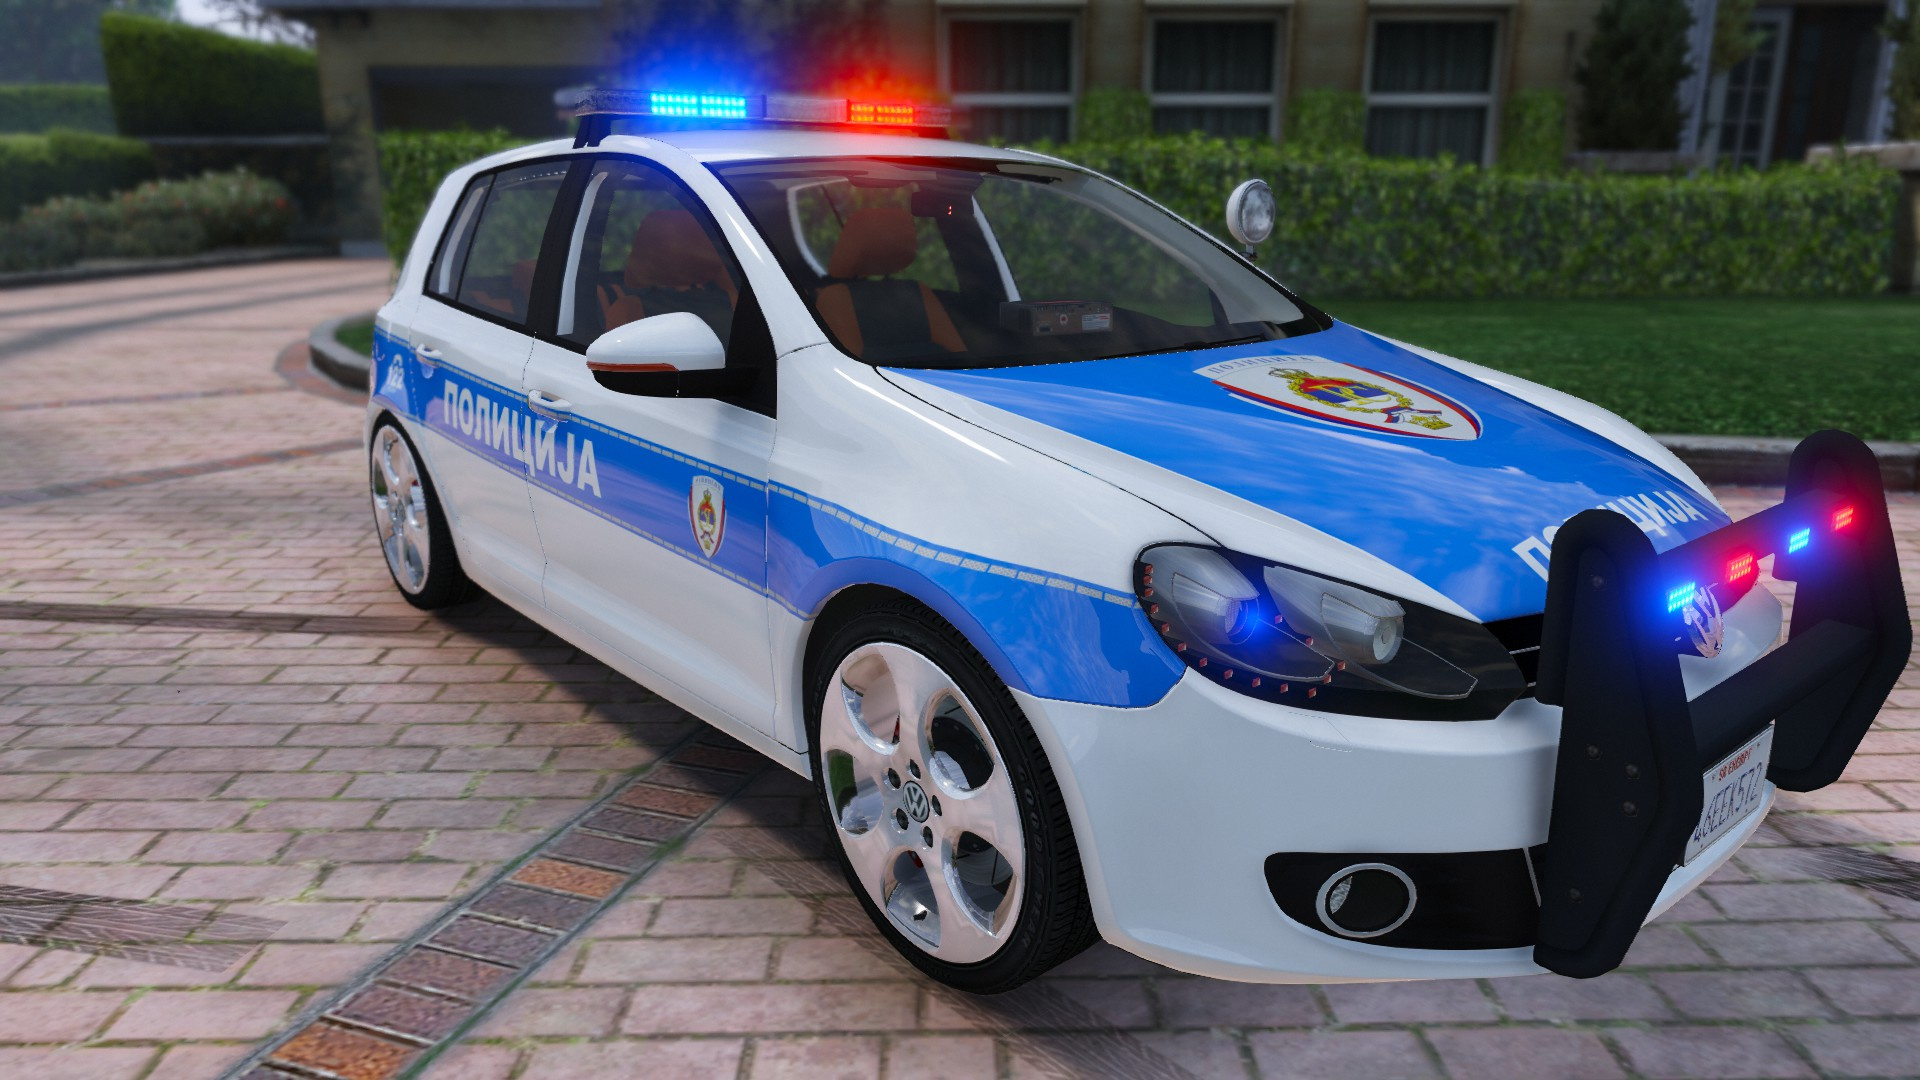 bosnian police skin pack (policija bih)